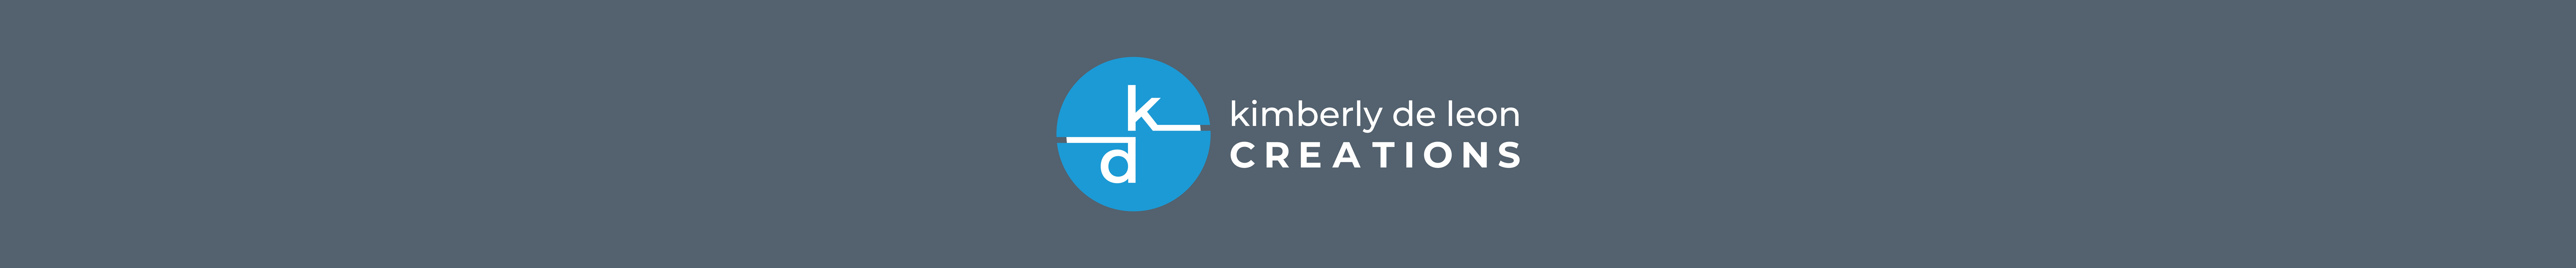 Kimberly De Leon のプロファイルバナー